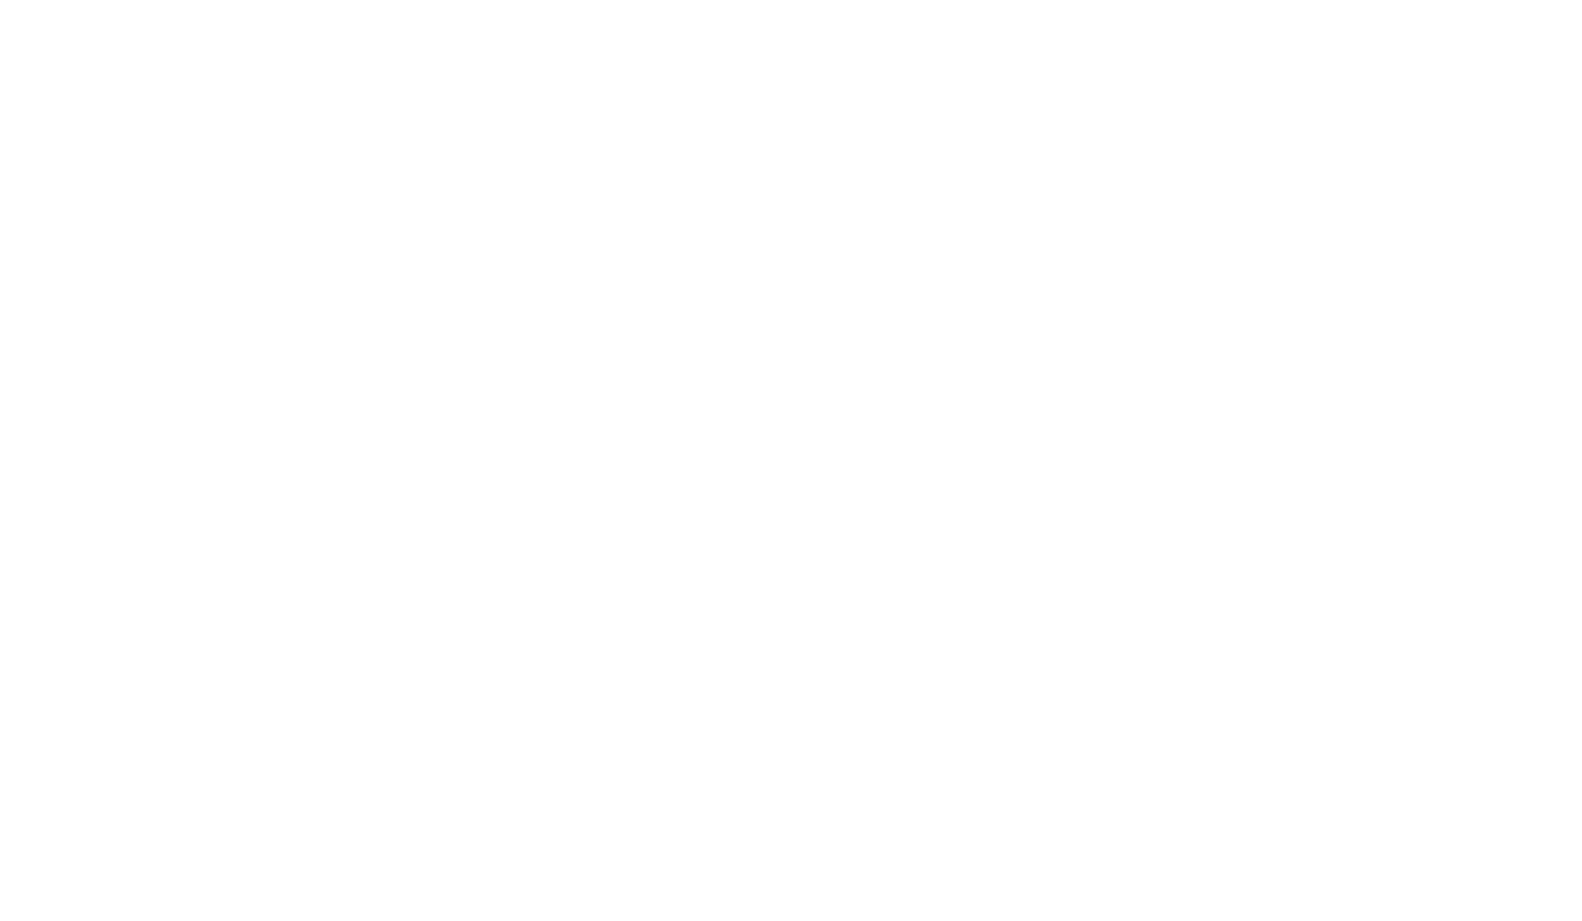 IQVIA logo for dark backgrounds (transparent PNG)